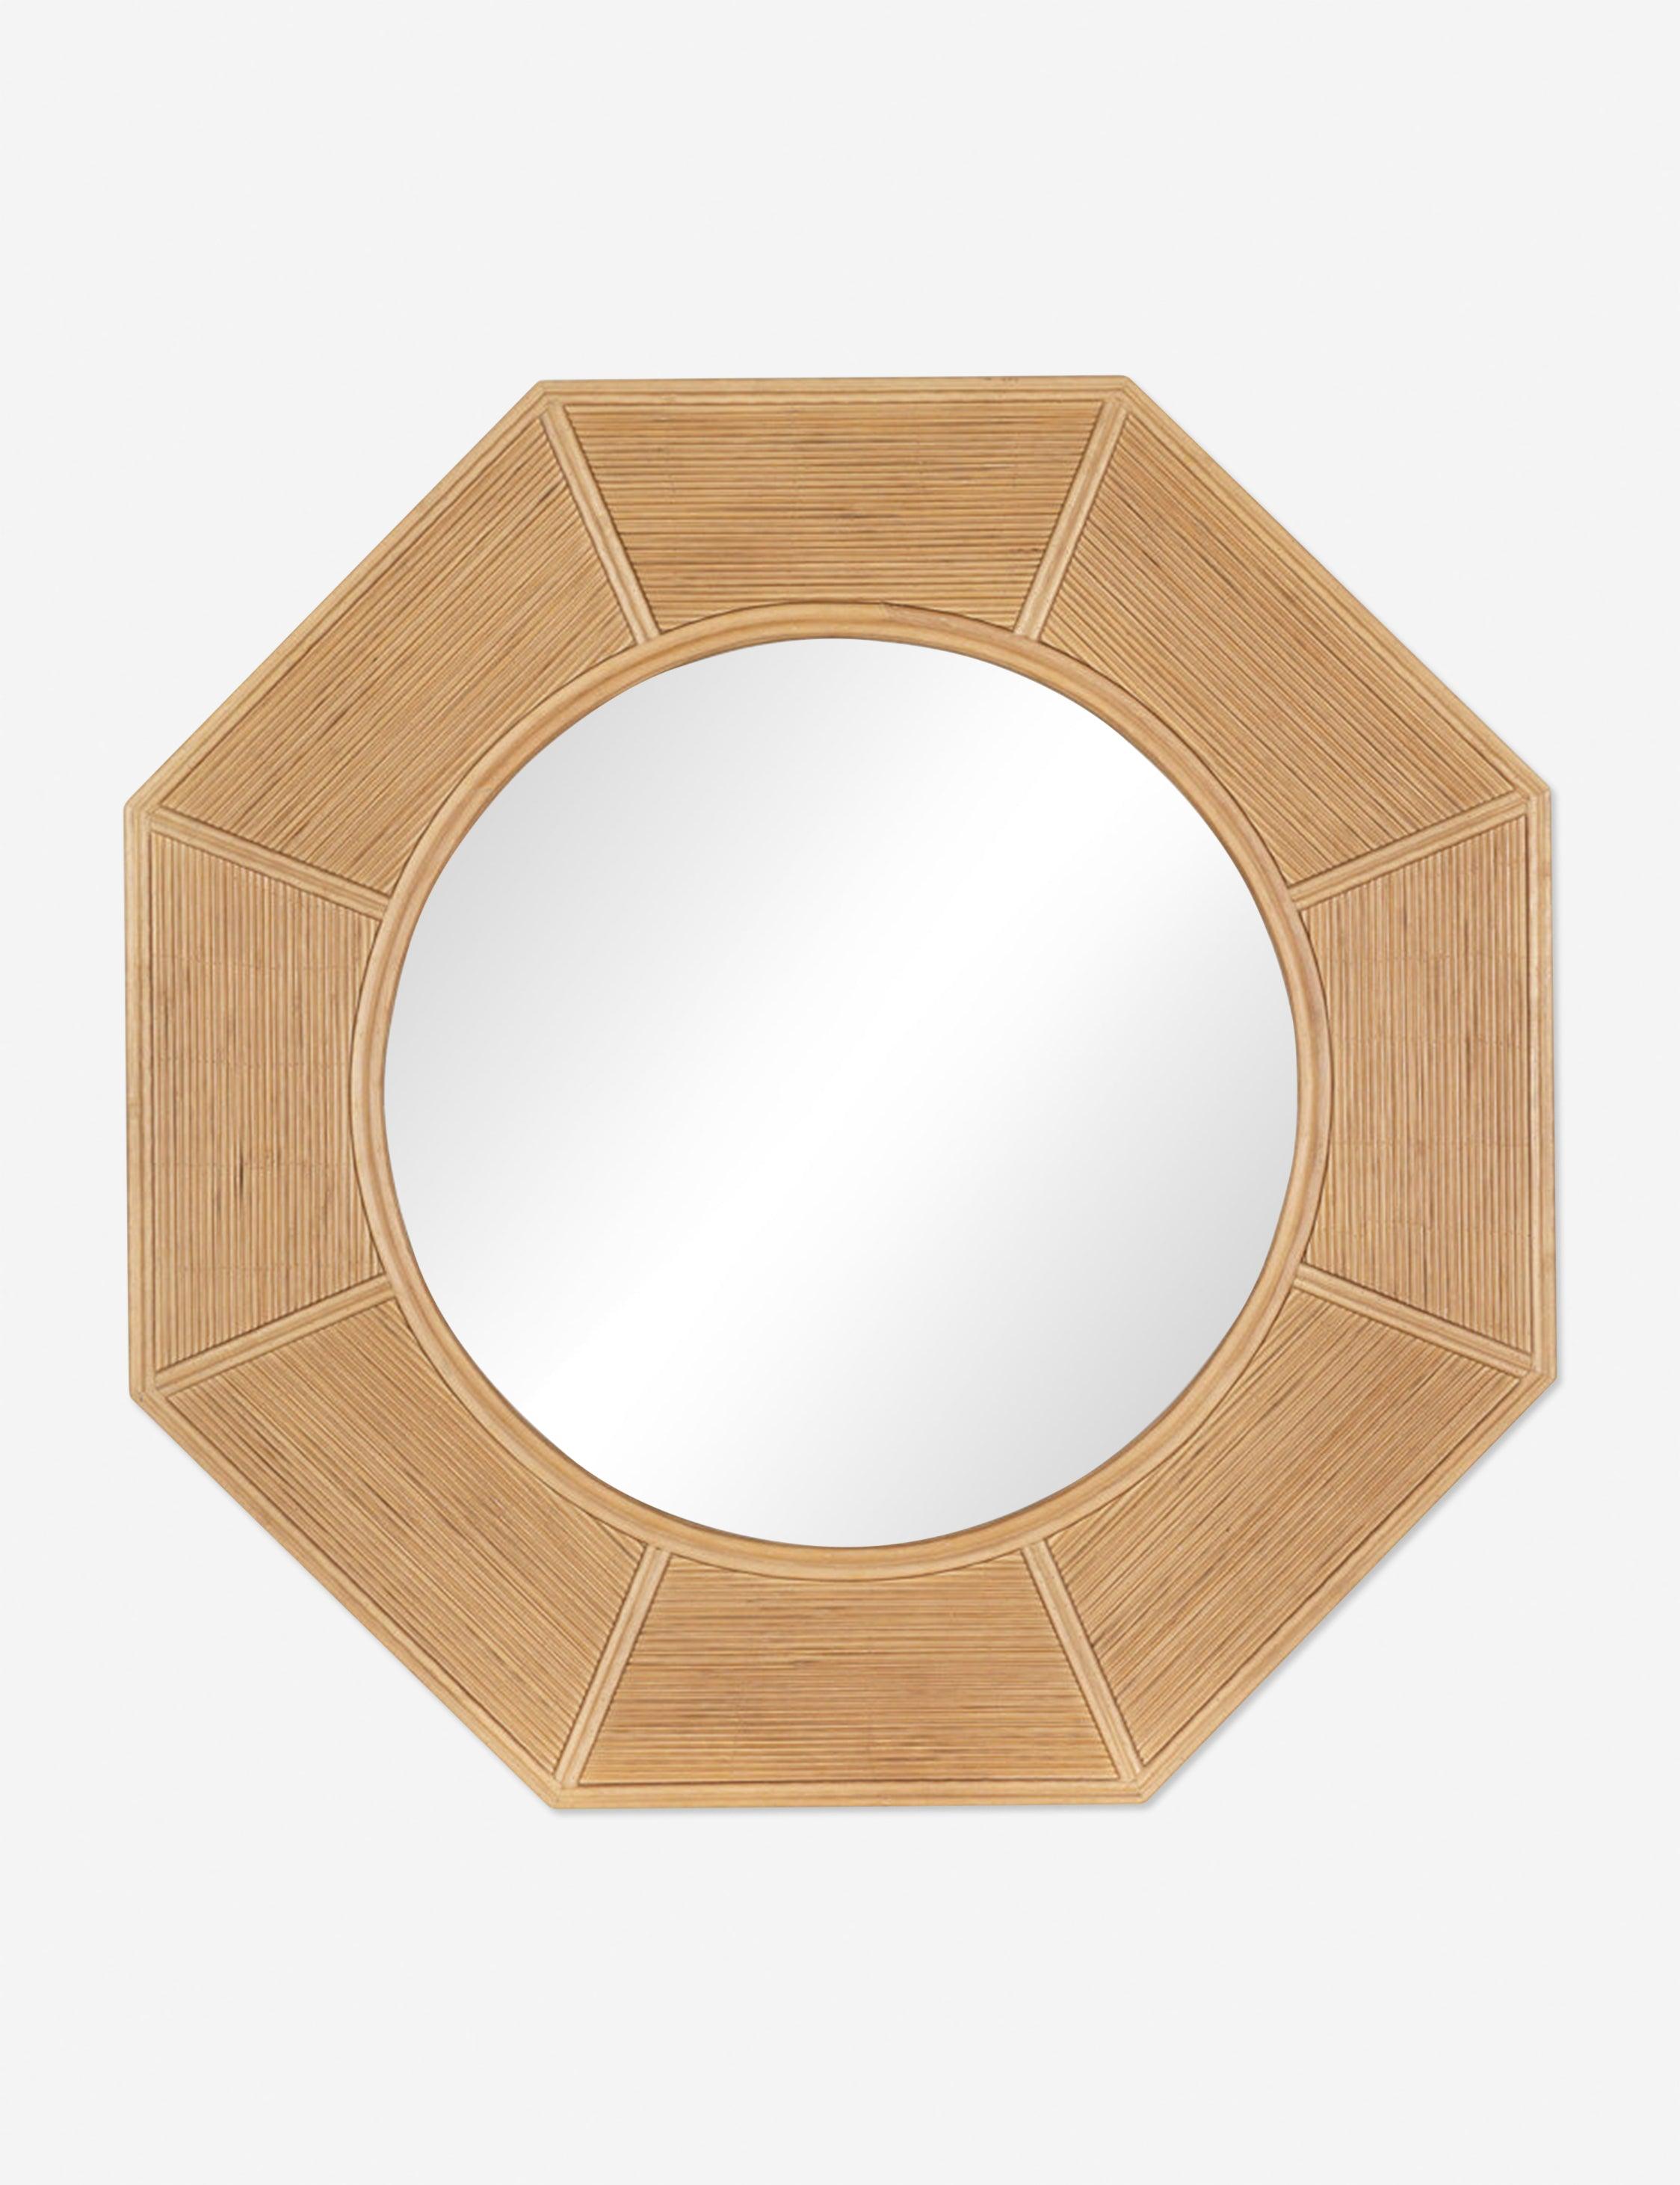 Bellamy Round 41" Natural Wood Geometric Wall Mirror